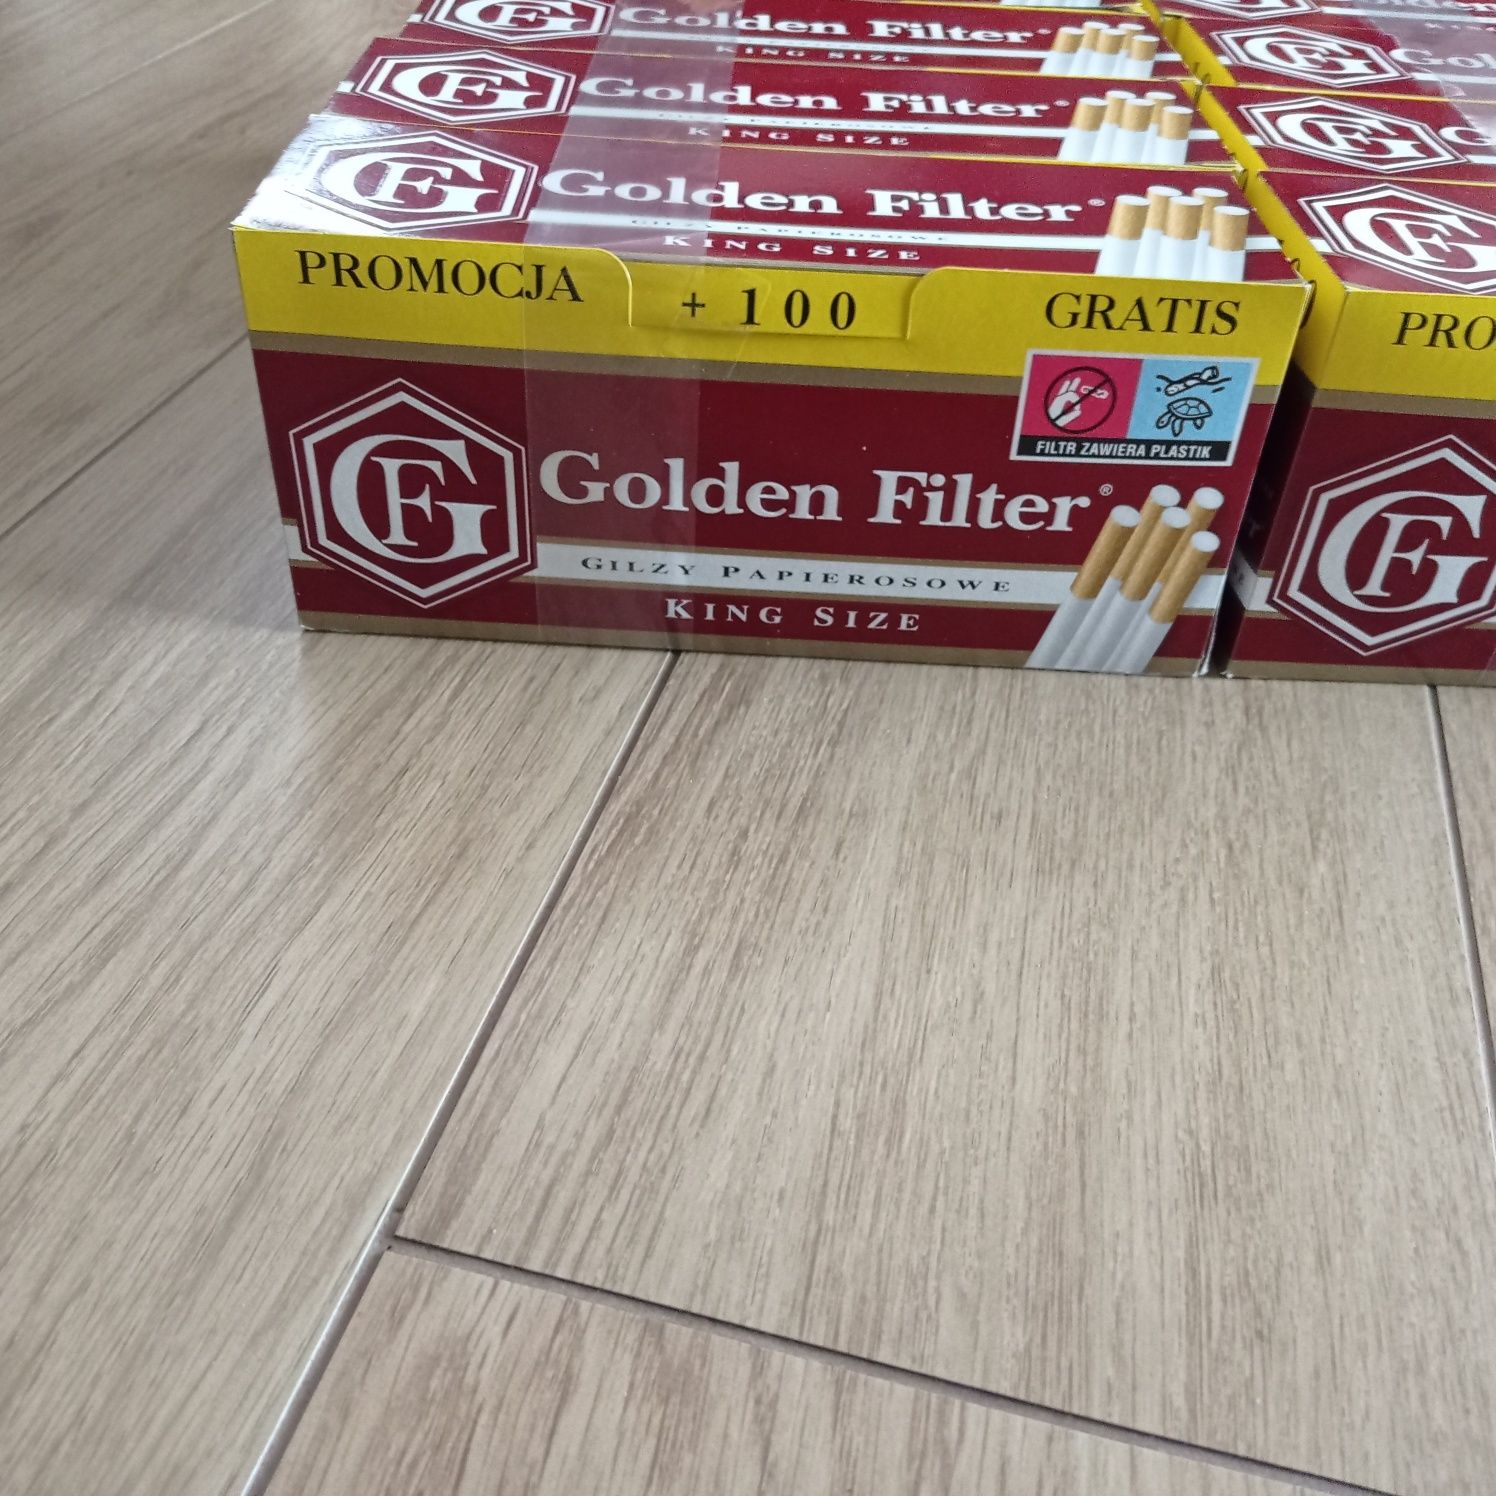 Gilzy papierosowe Golden Filter